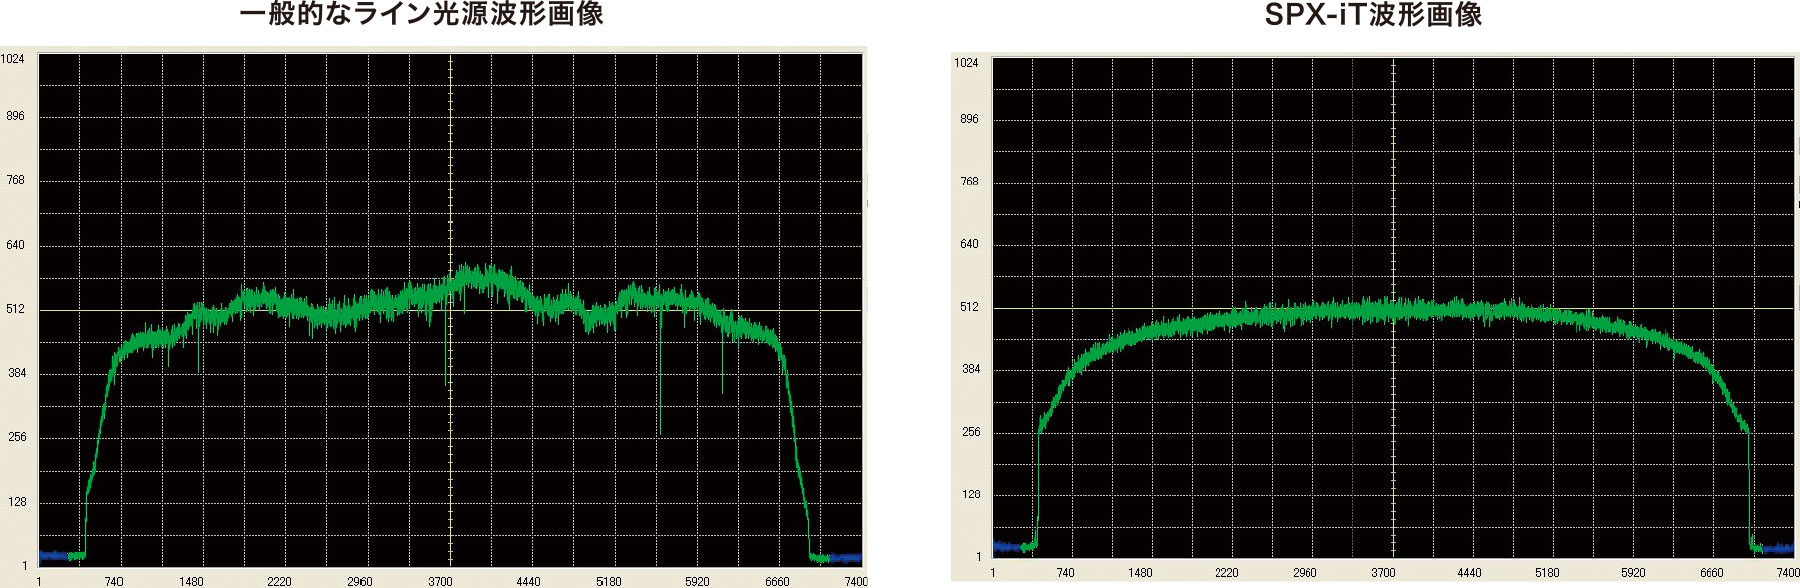 SPX-iT ラインカメラ波形比較 均一波形